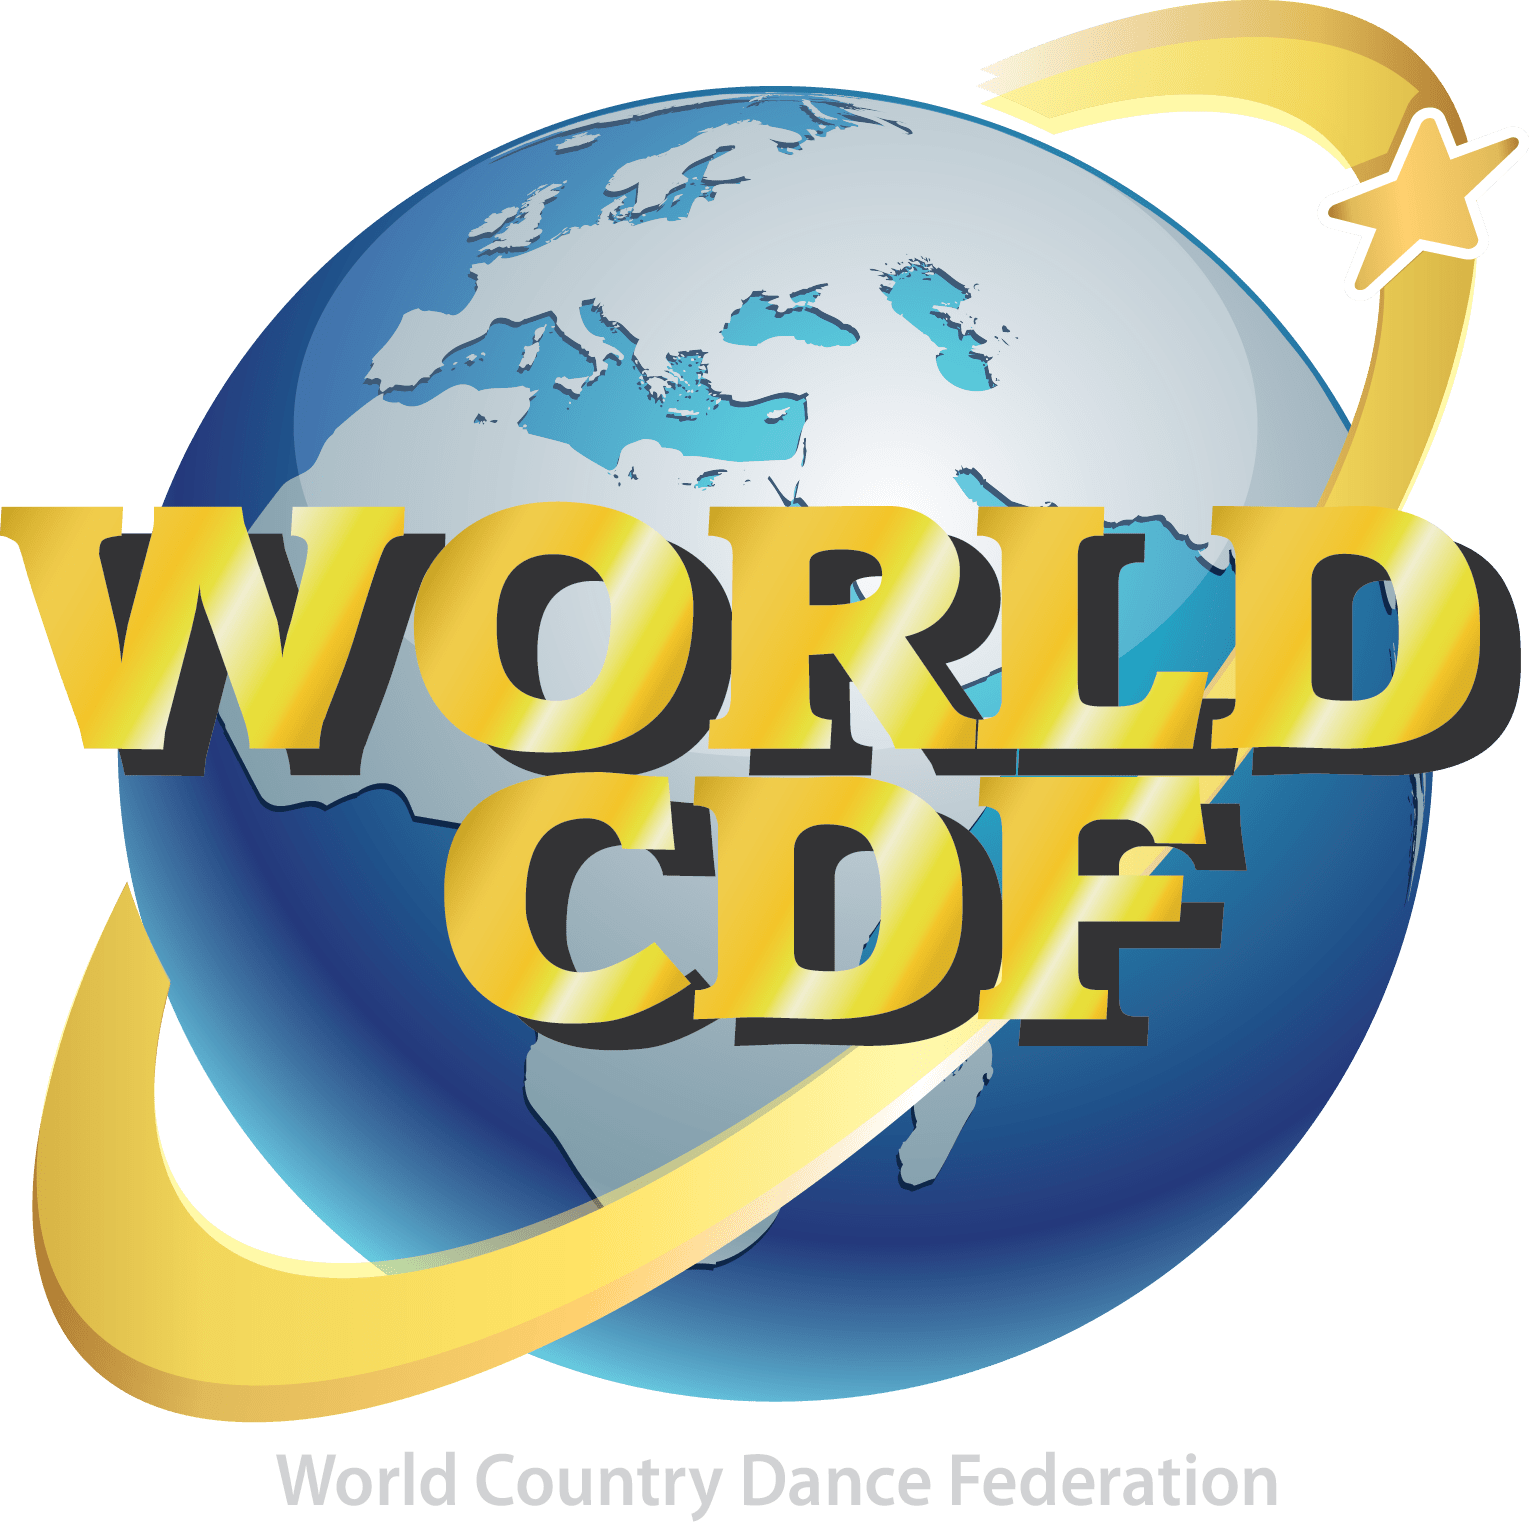 Worldcdf-2013-logo-White-Text-Transparent-HQ-version.png